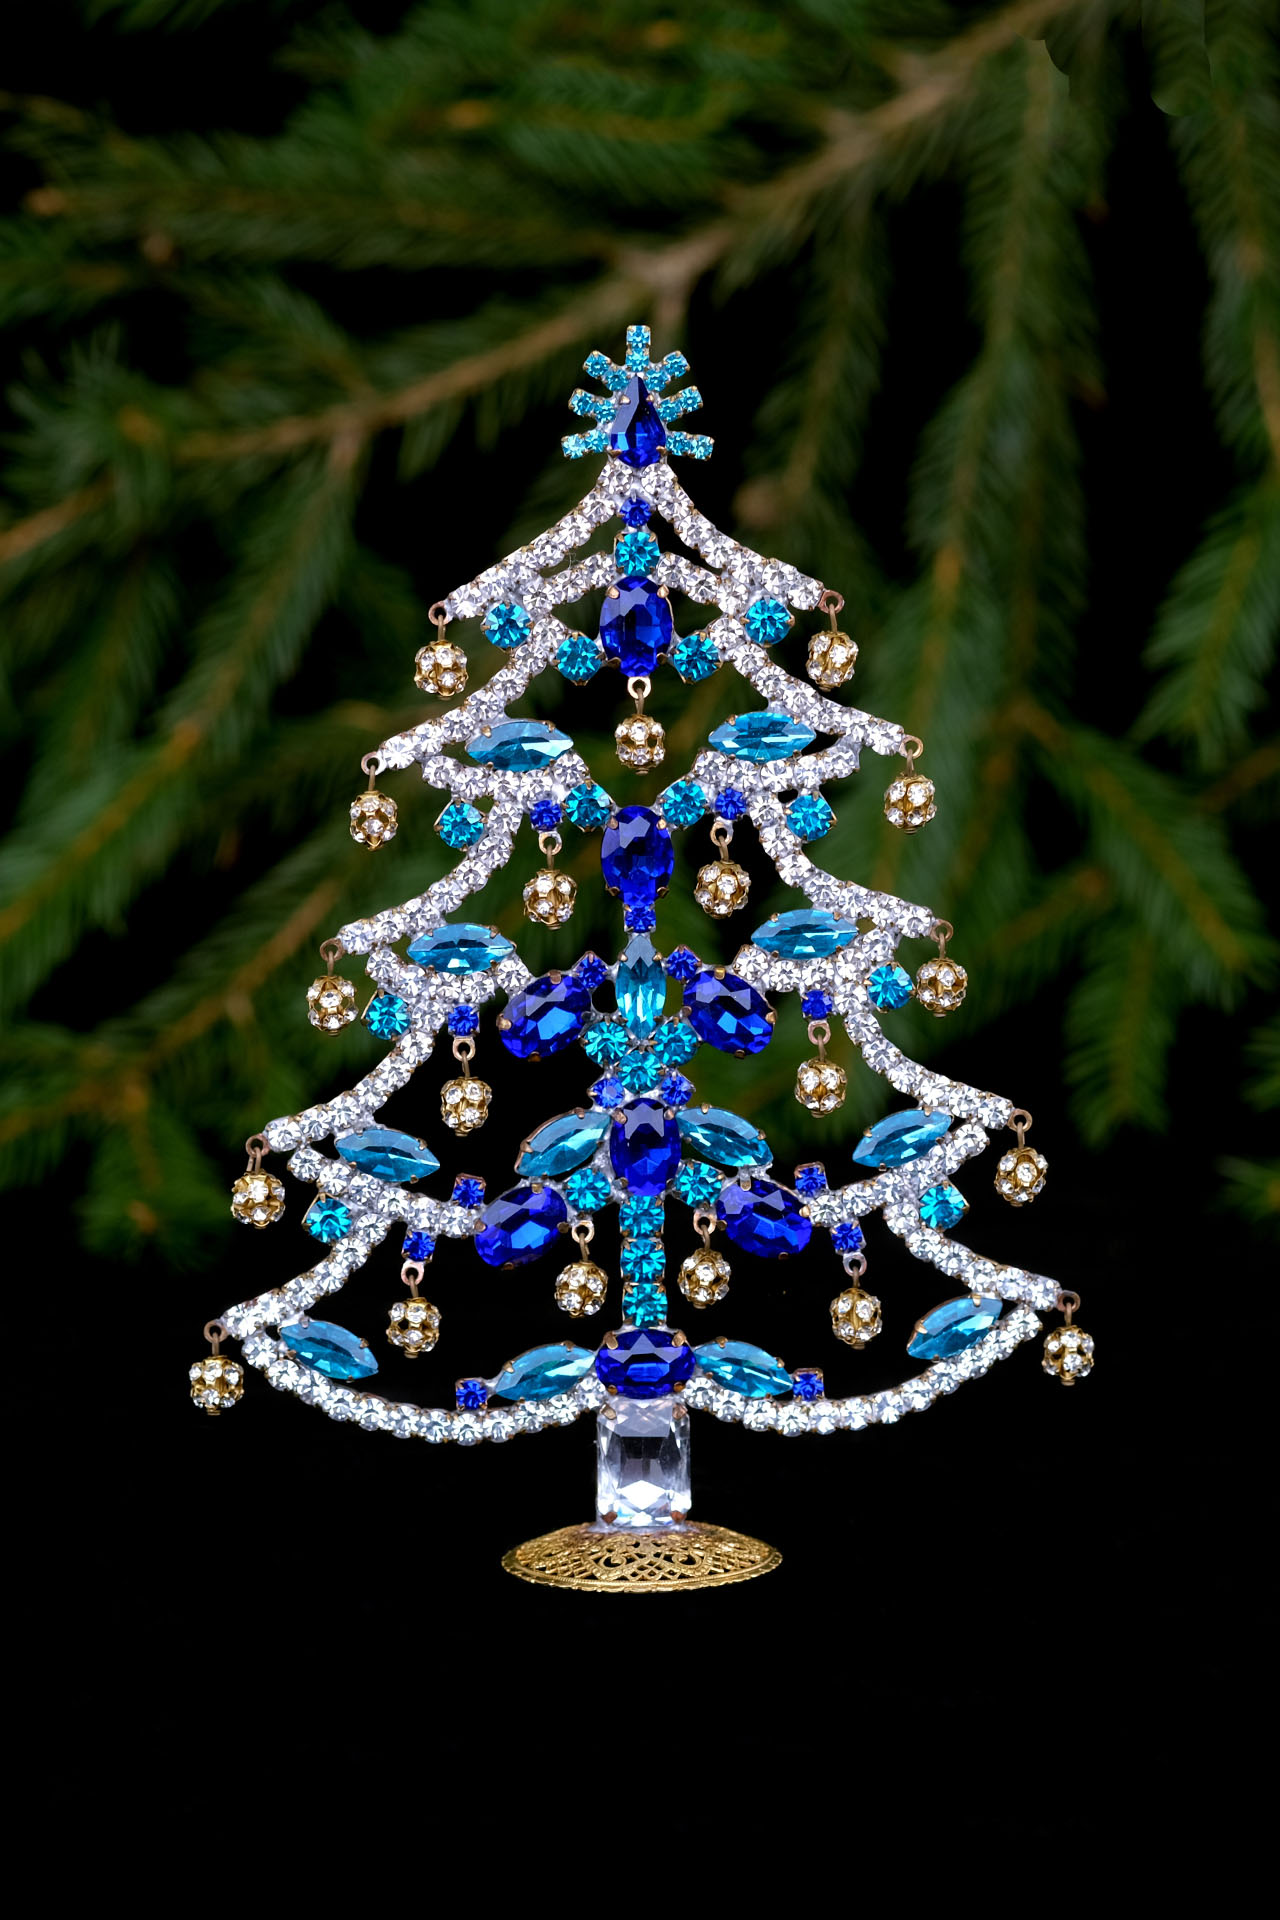 Tabeltop Christmas tree - handmade with blue rhinestones